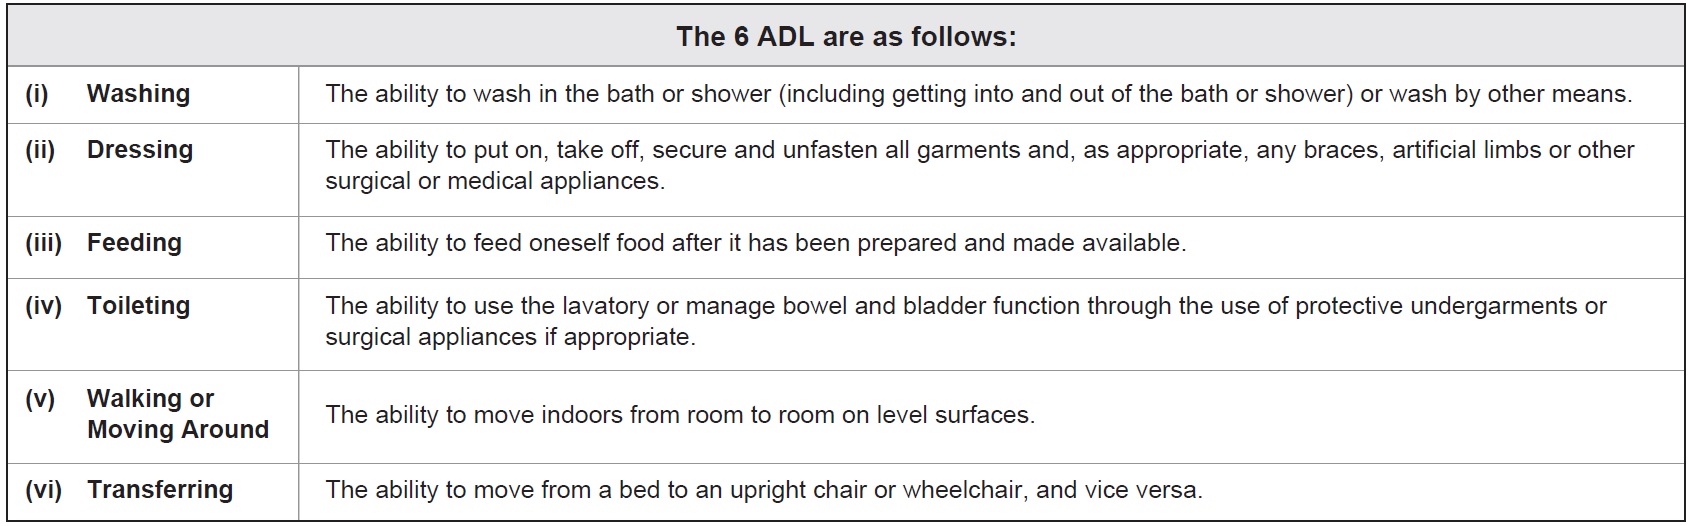 Definition of ADLs